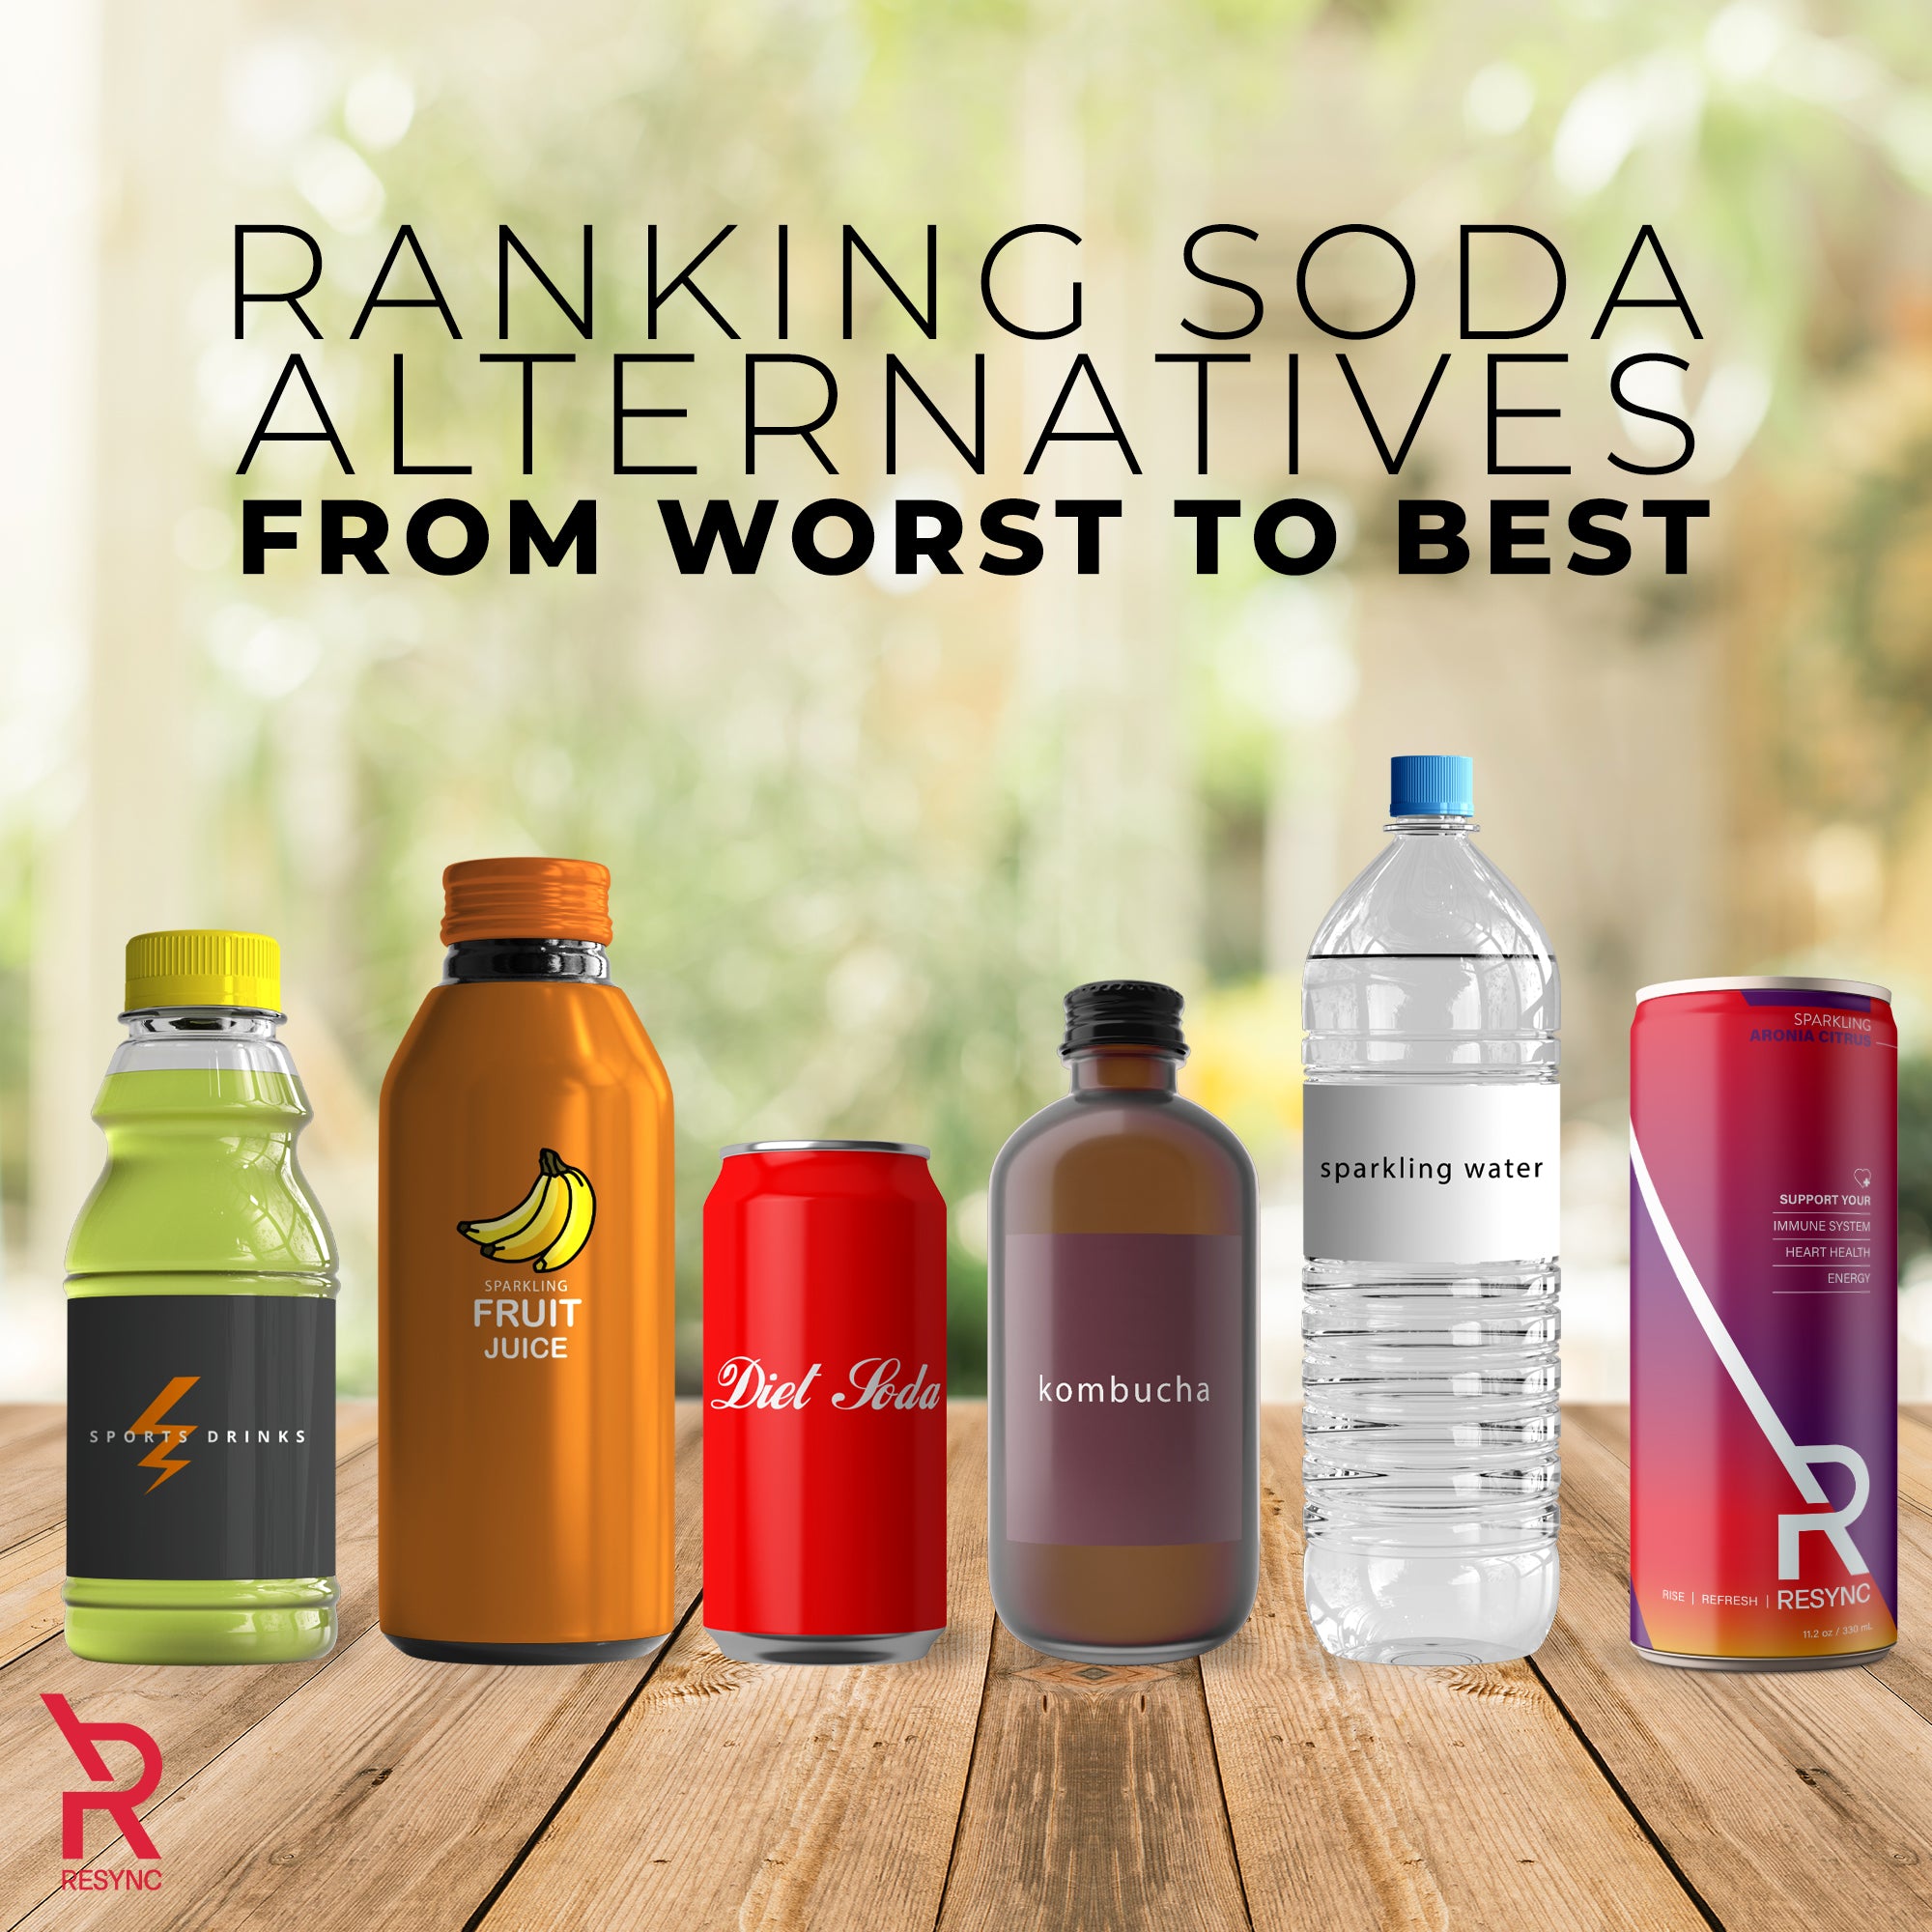 Ranking Soda Alternative From Worst to Best 